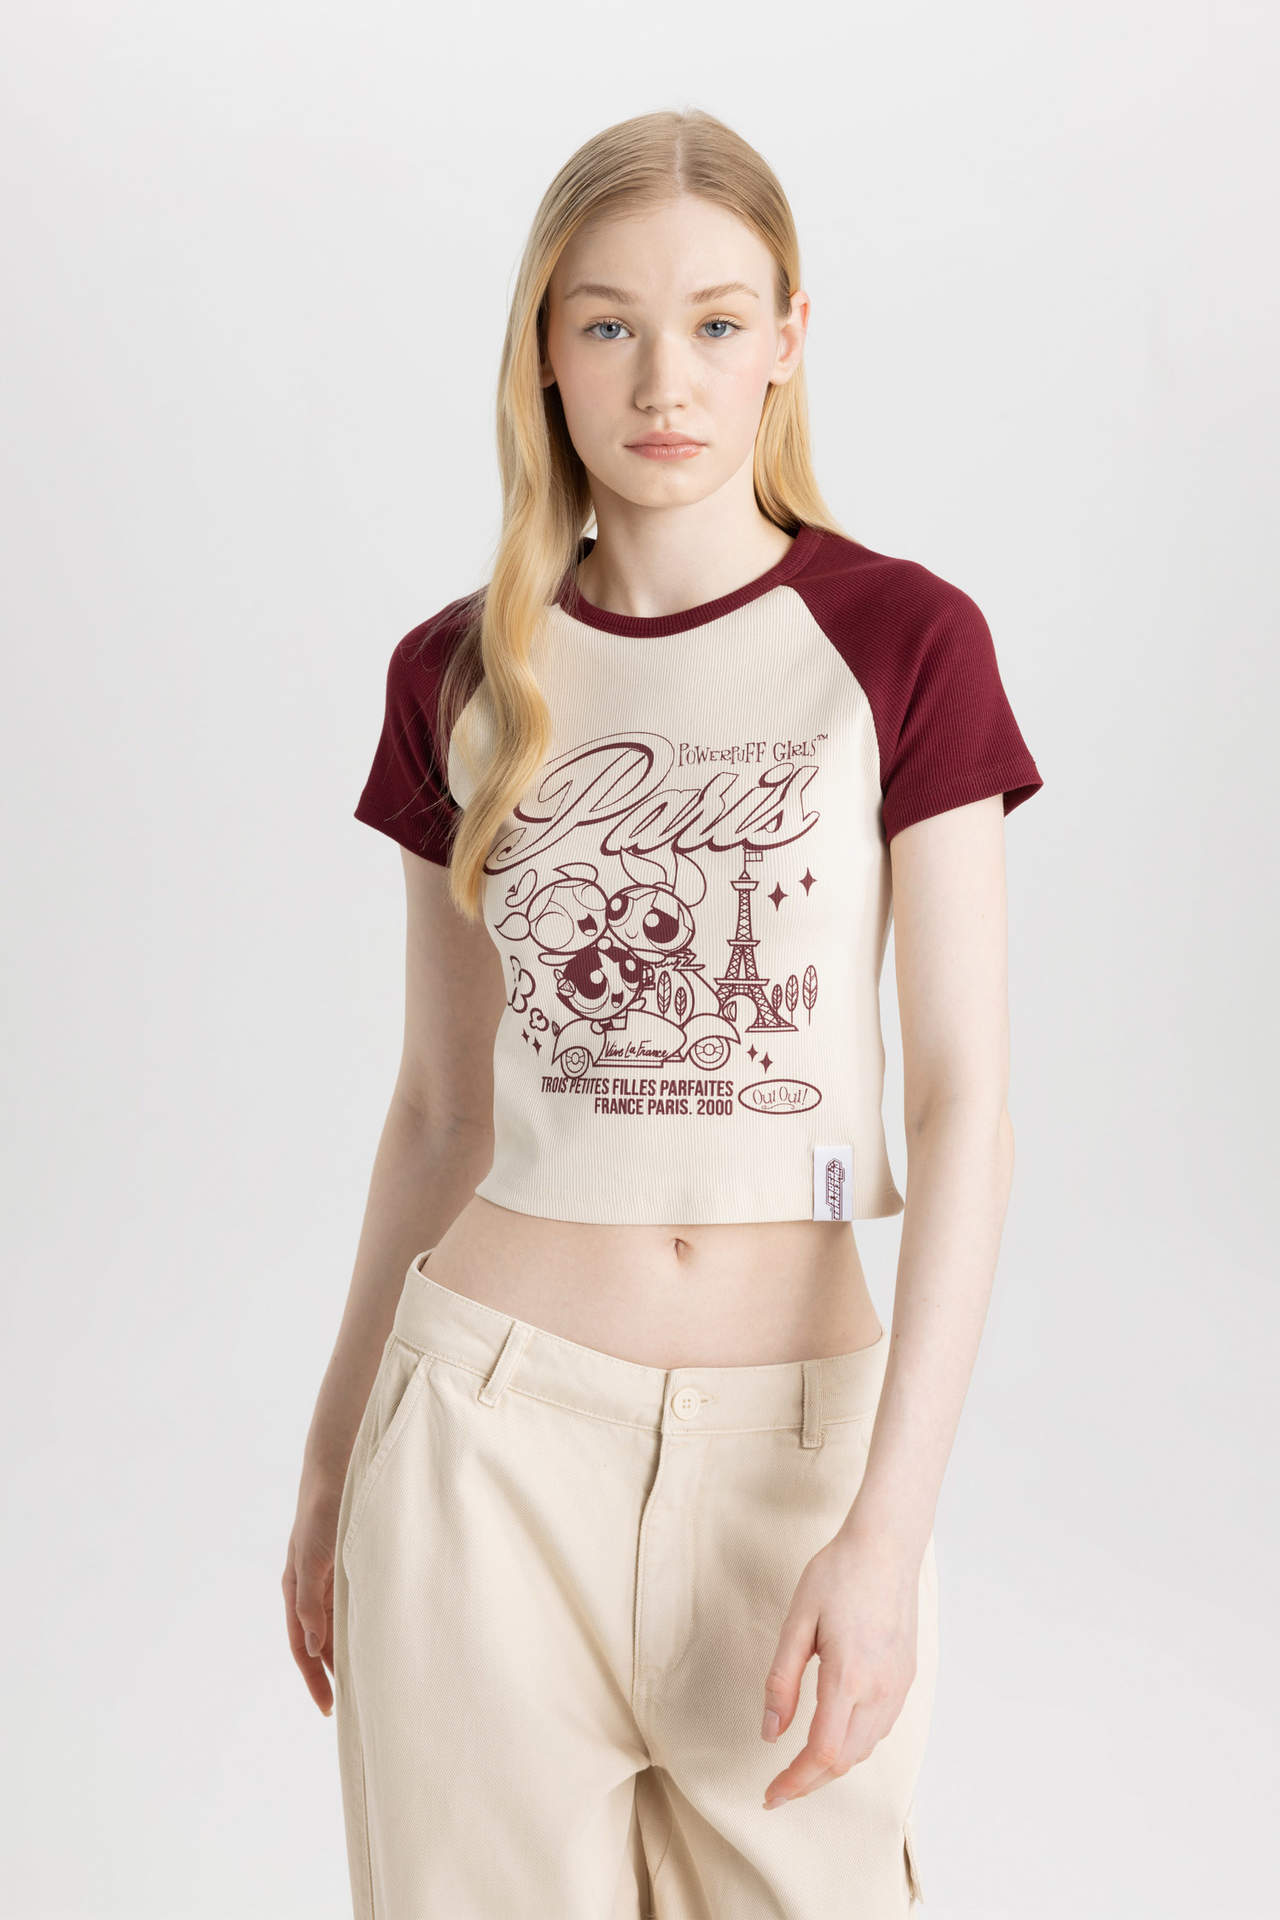 DEFACTO Slim Fit PowerPuff Girls Licensed Printed Camisole Short Sleeve T-Shirt